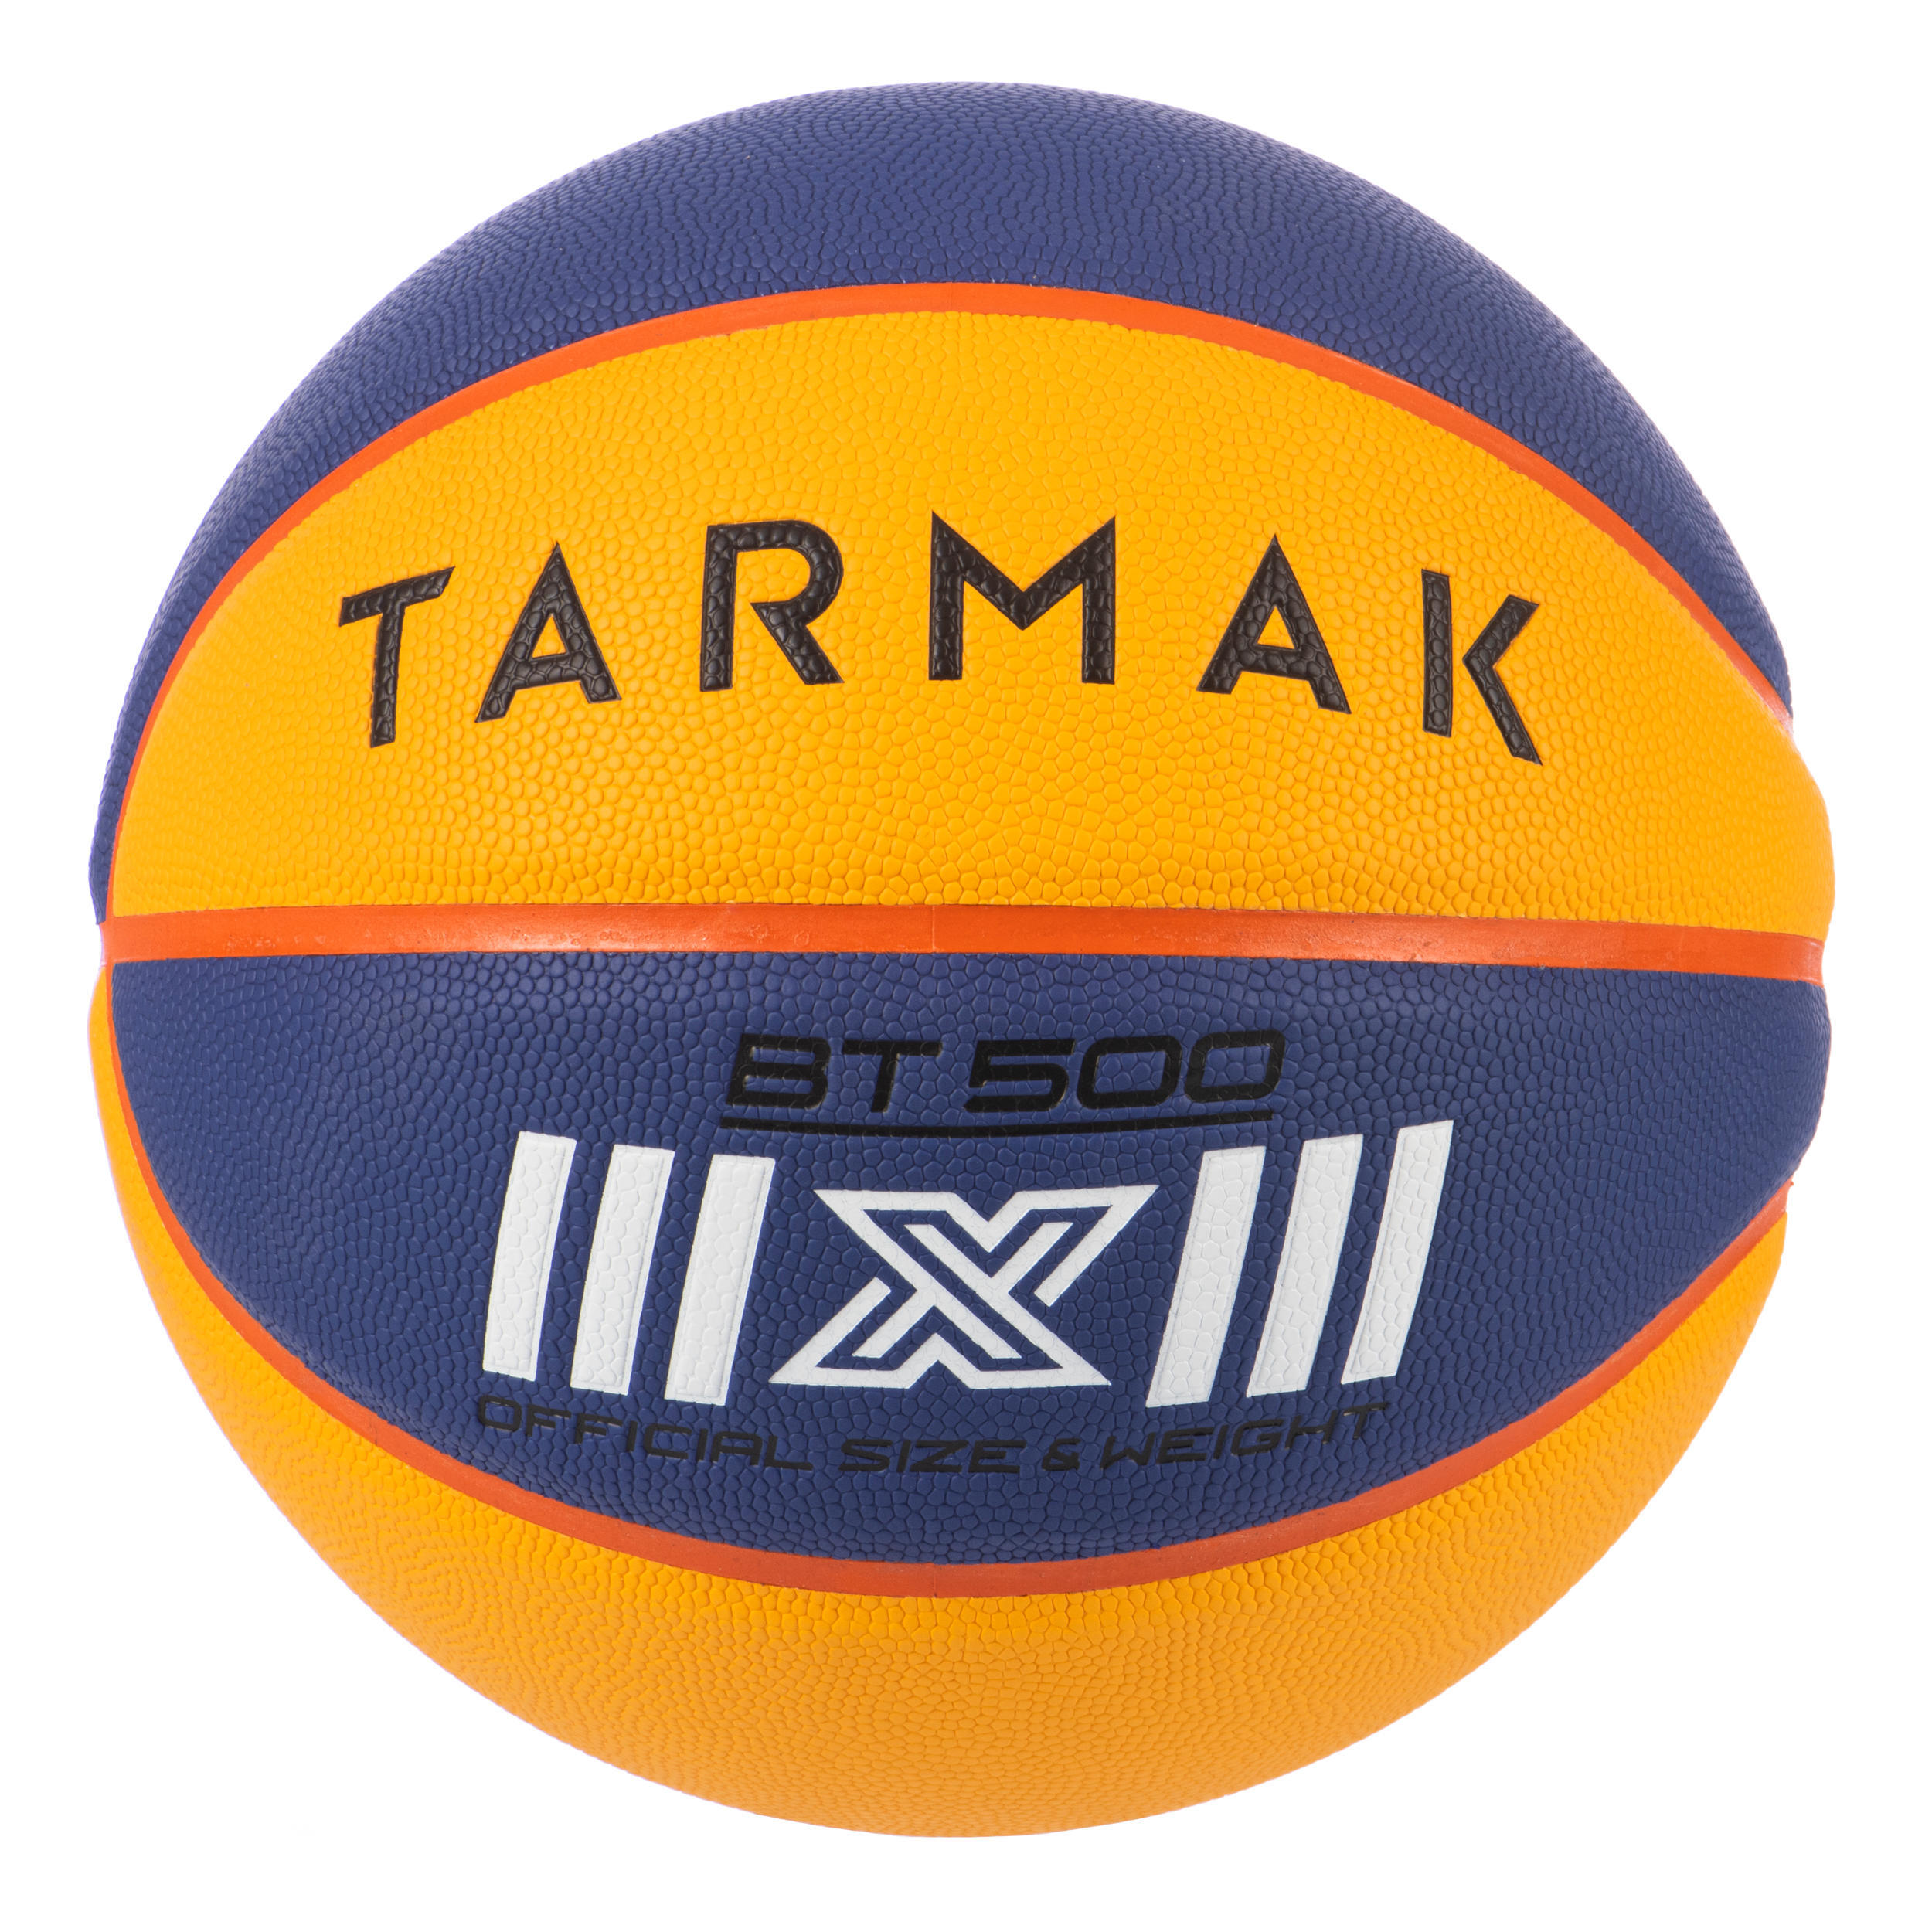 Basketball 3x3 Size 6 BT 500 - Blue/Yellow 1/5